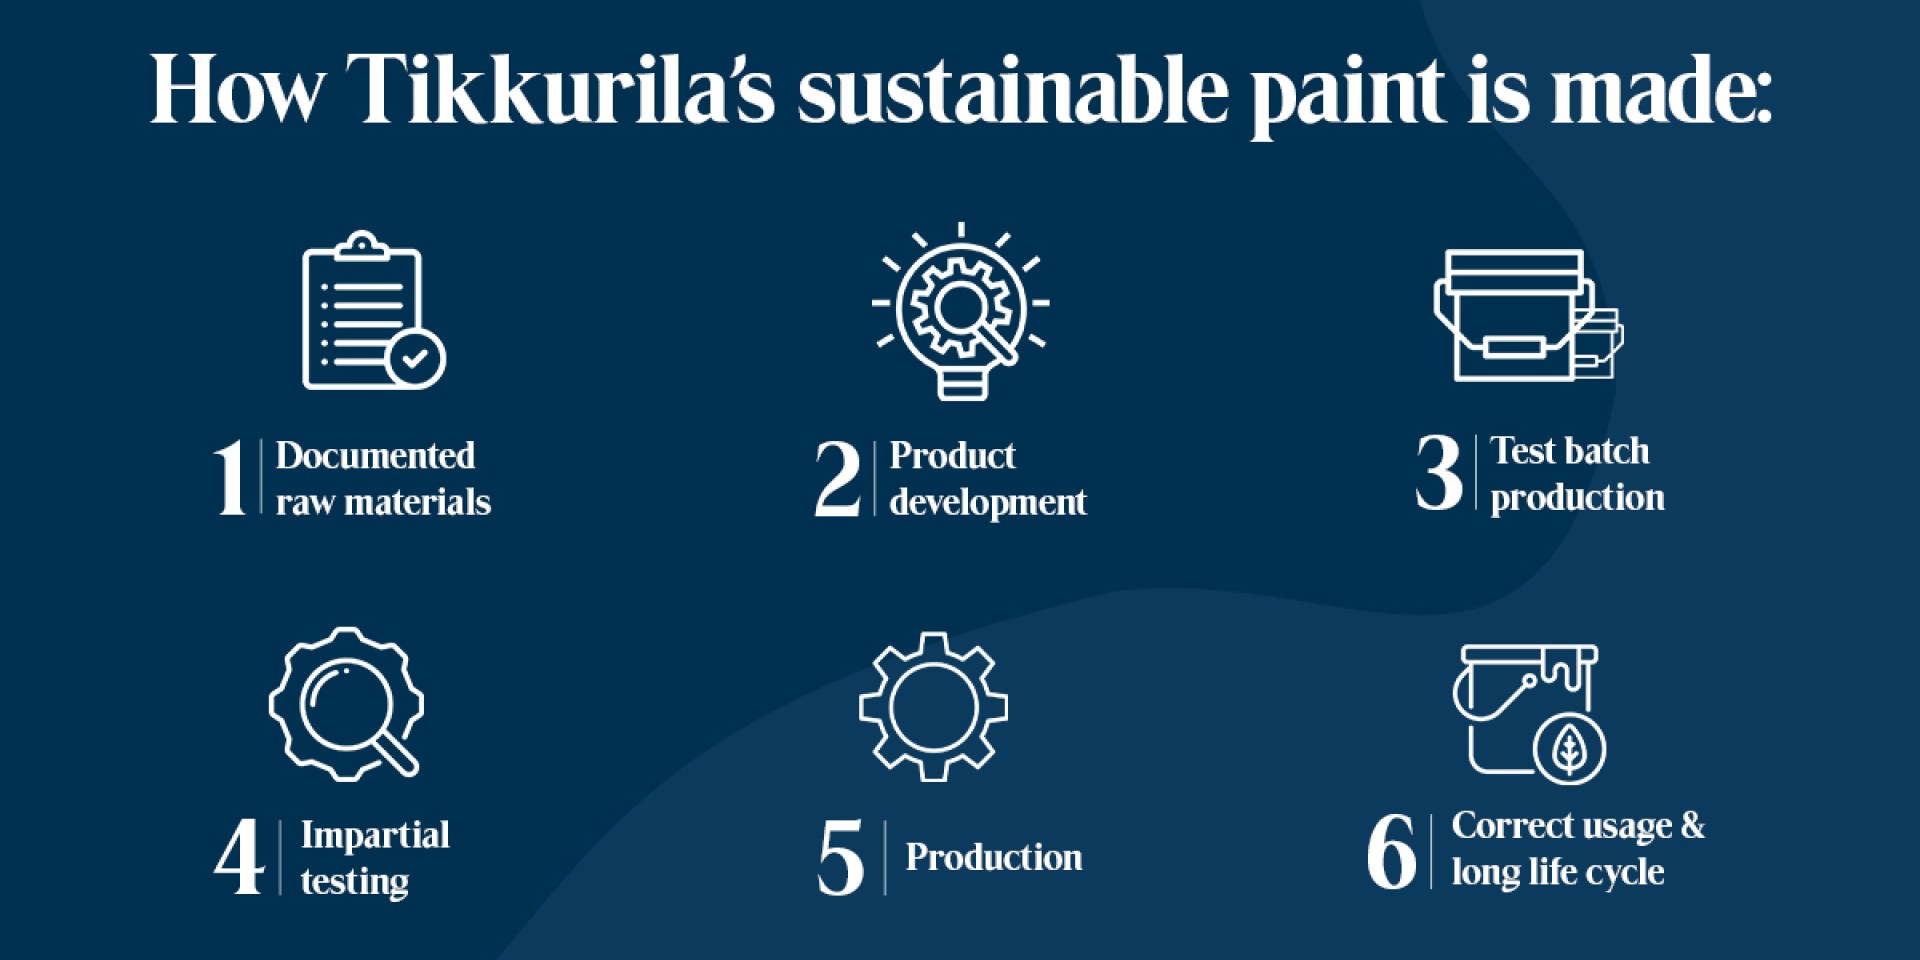 Tikkurila sustainability paint process